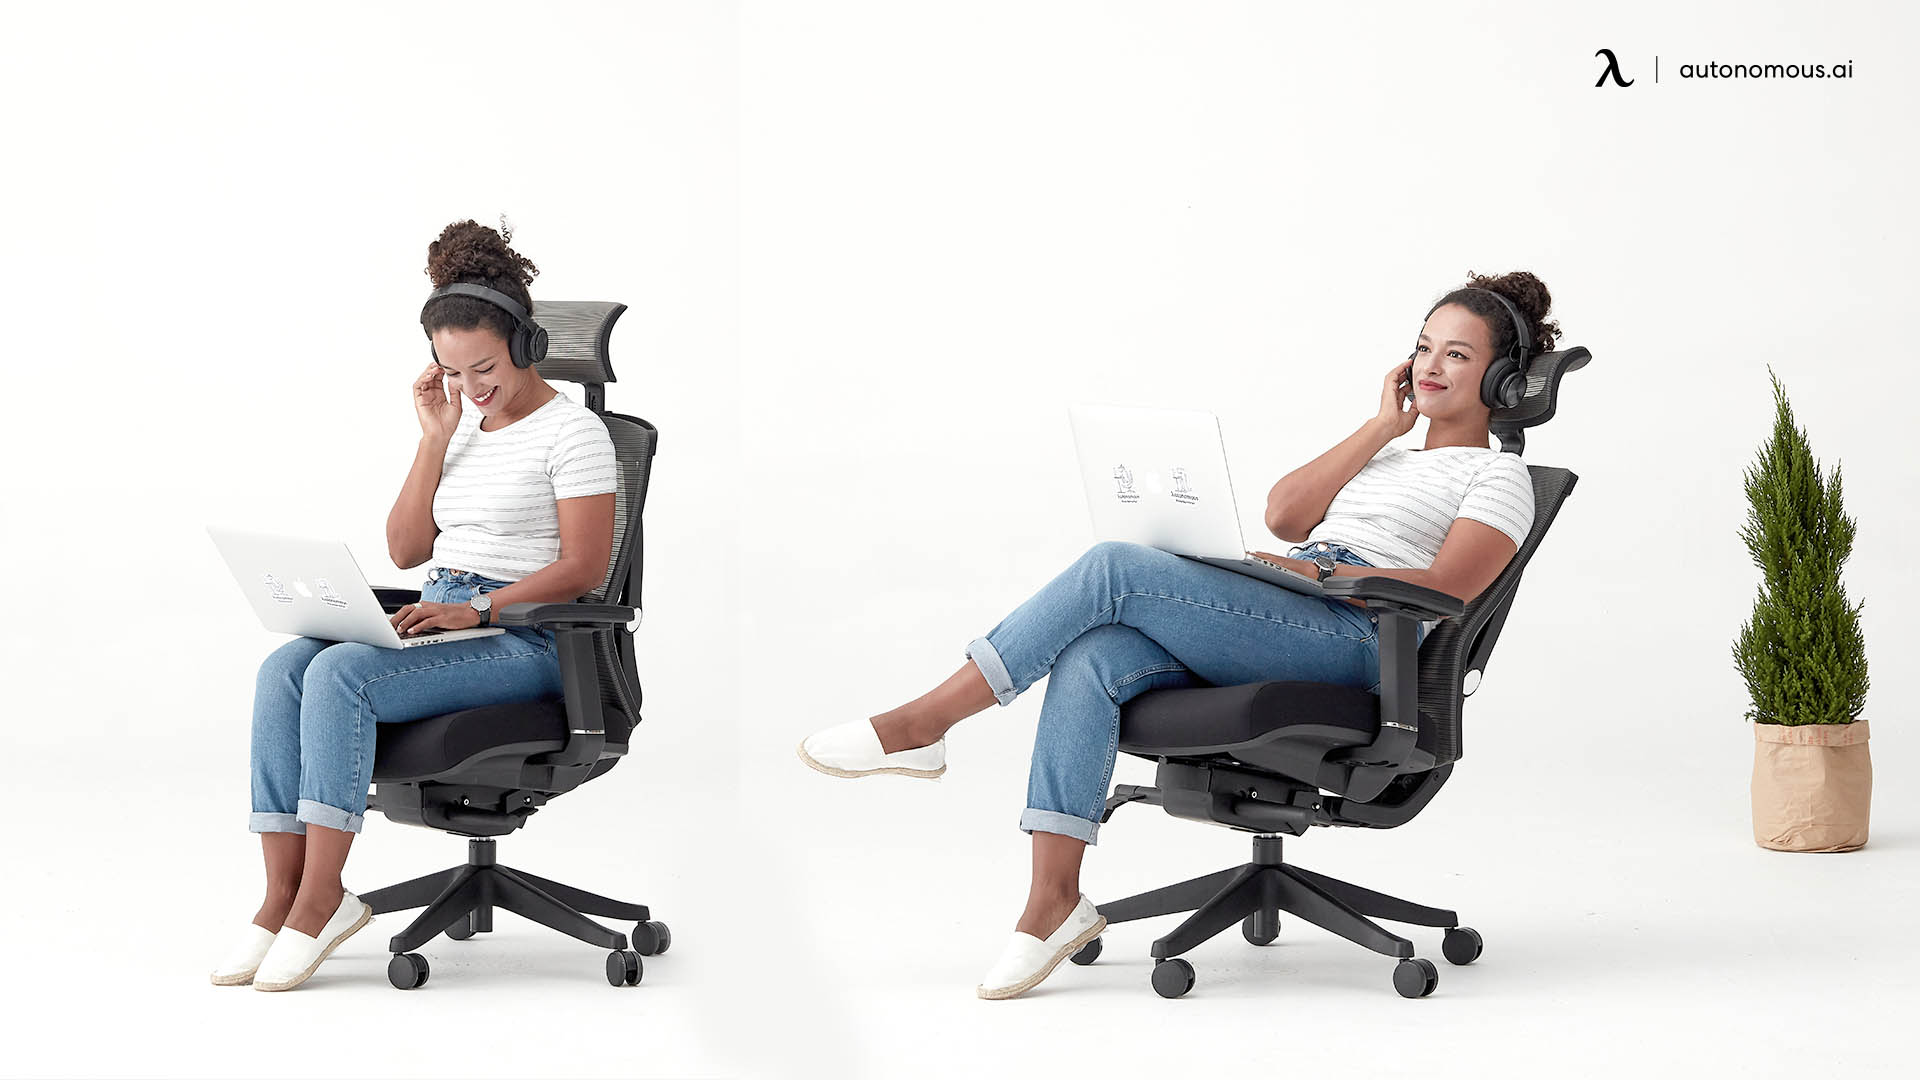 Ergonomic Office Chair Headrest, Chair With Headrest Or Not